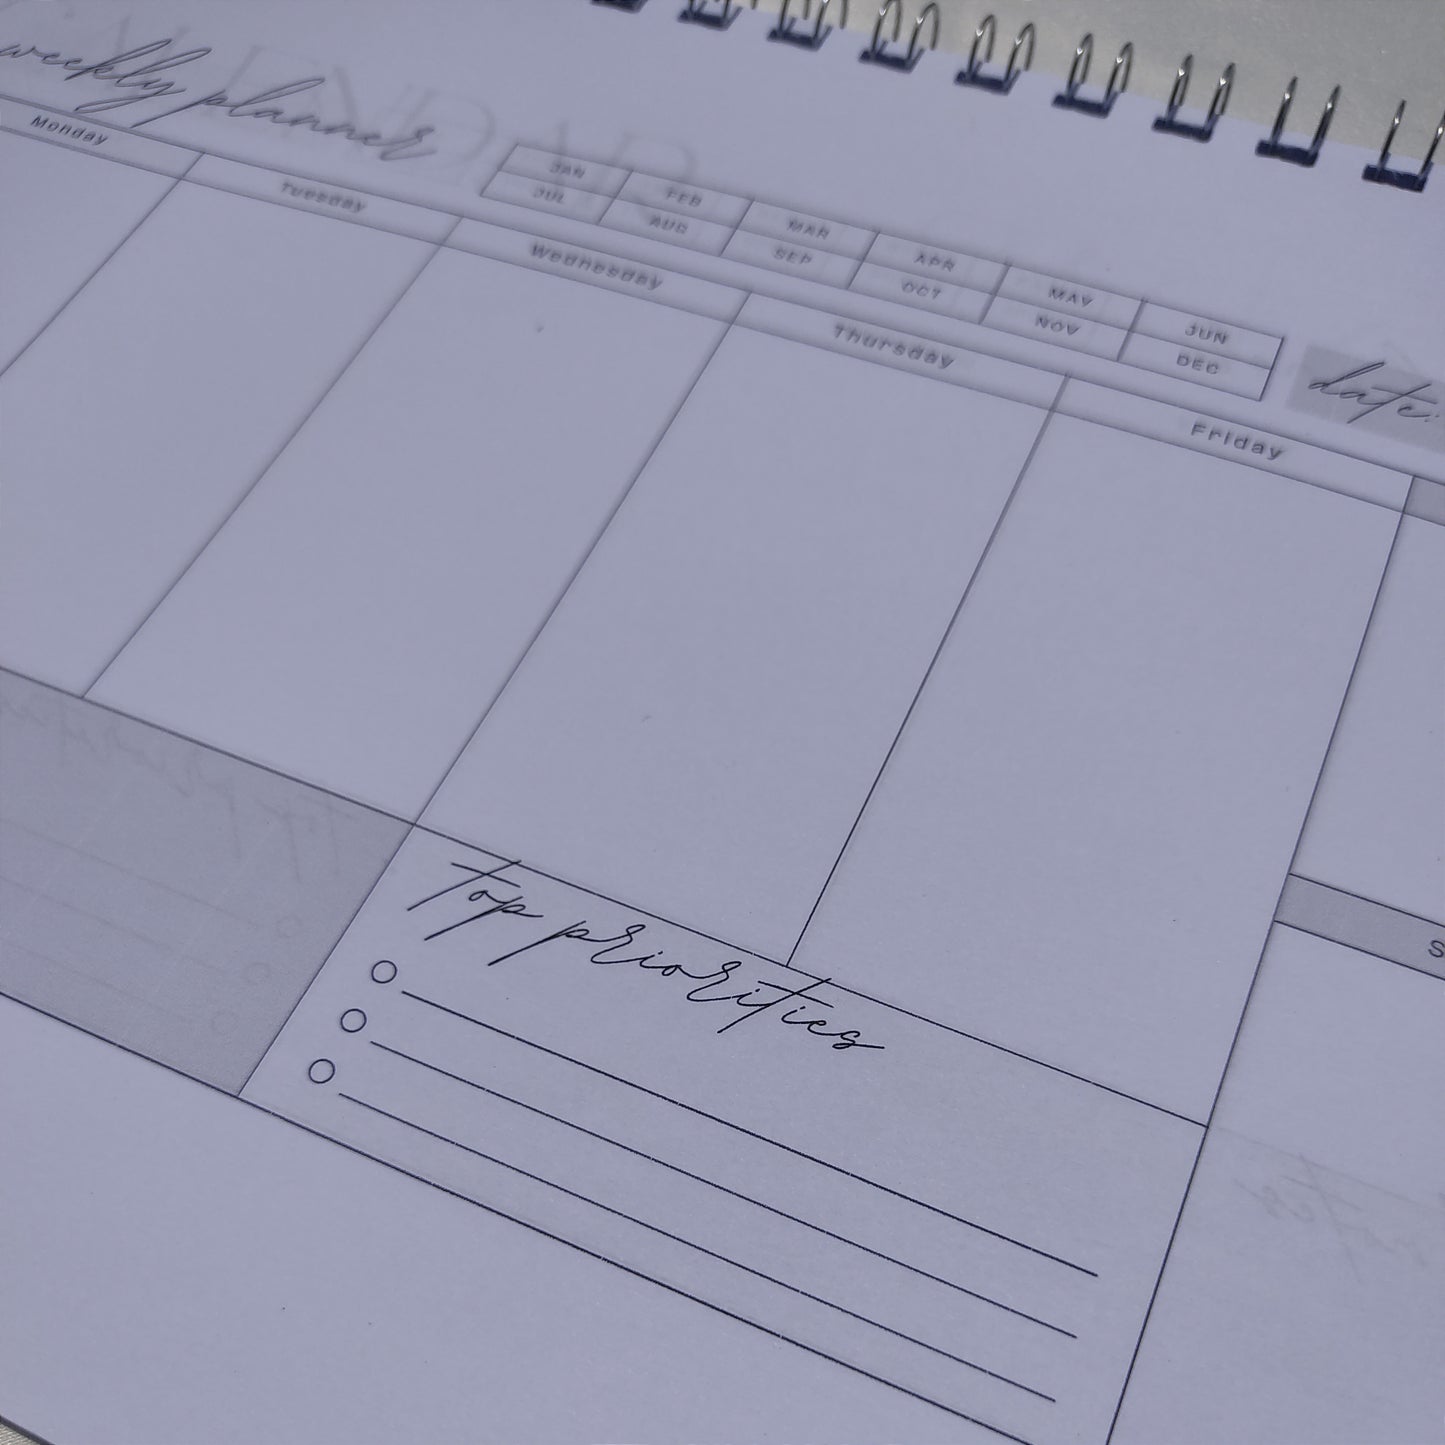 Minimal Weekly Planner Notebook A4